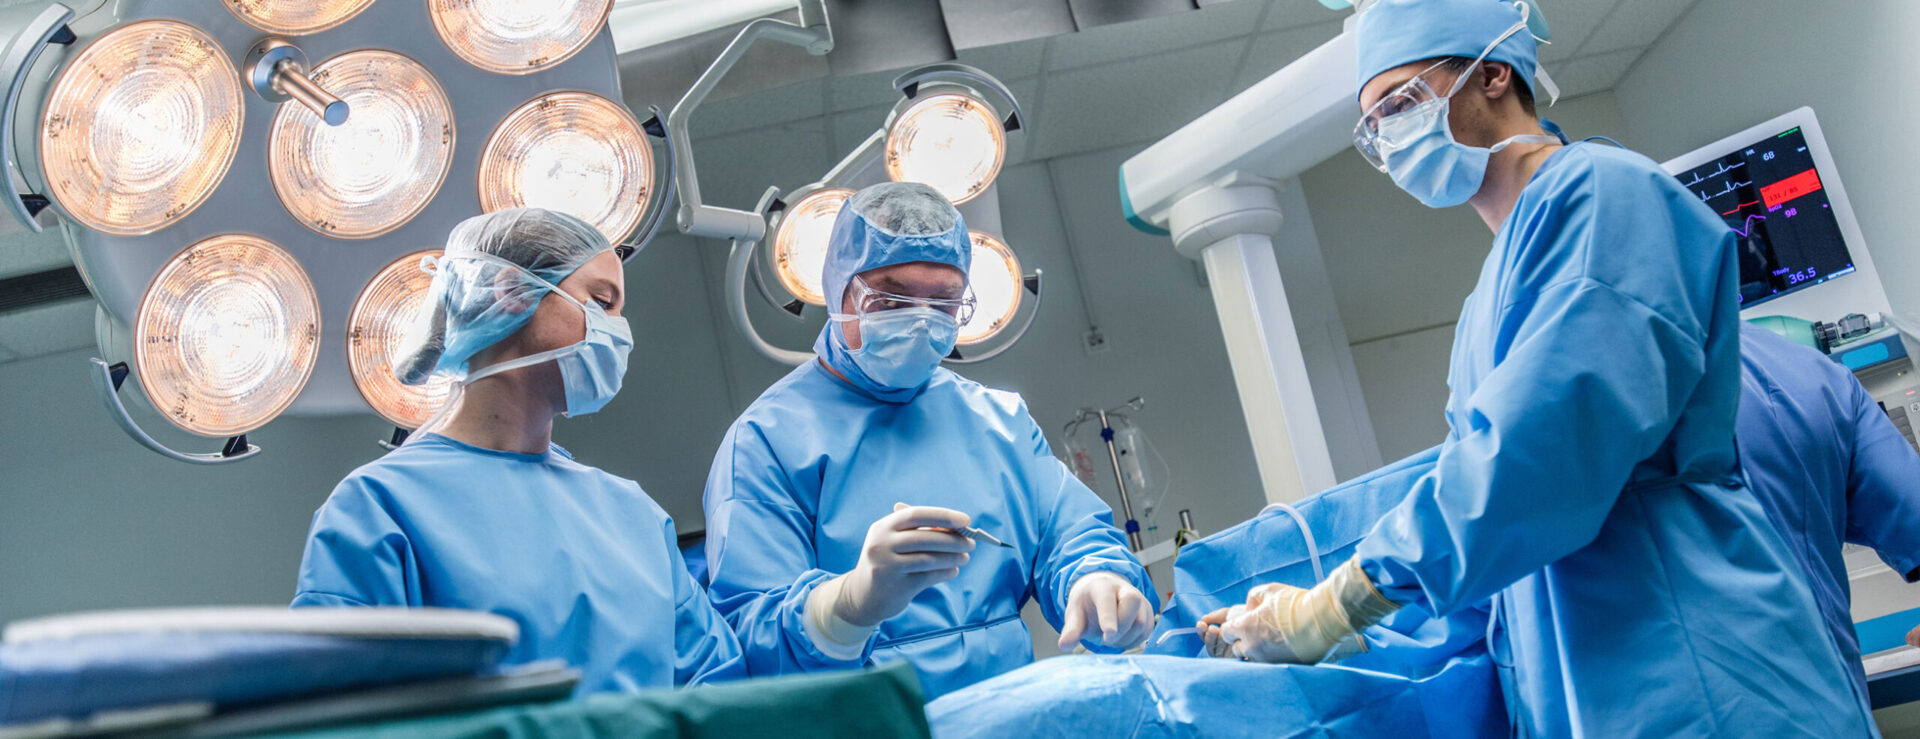 three surgeons in operating room